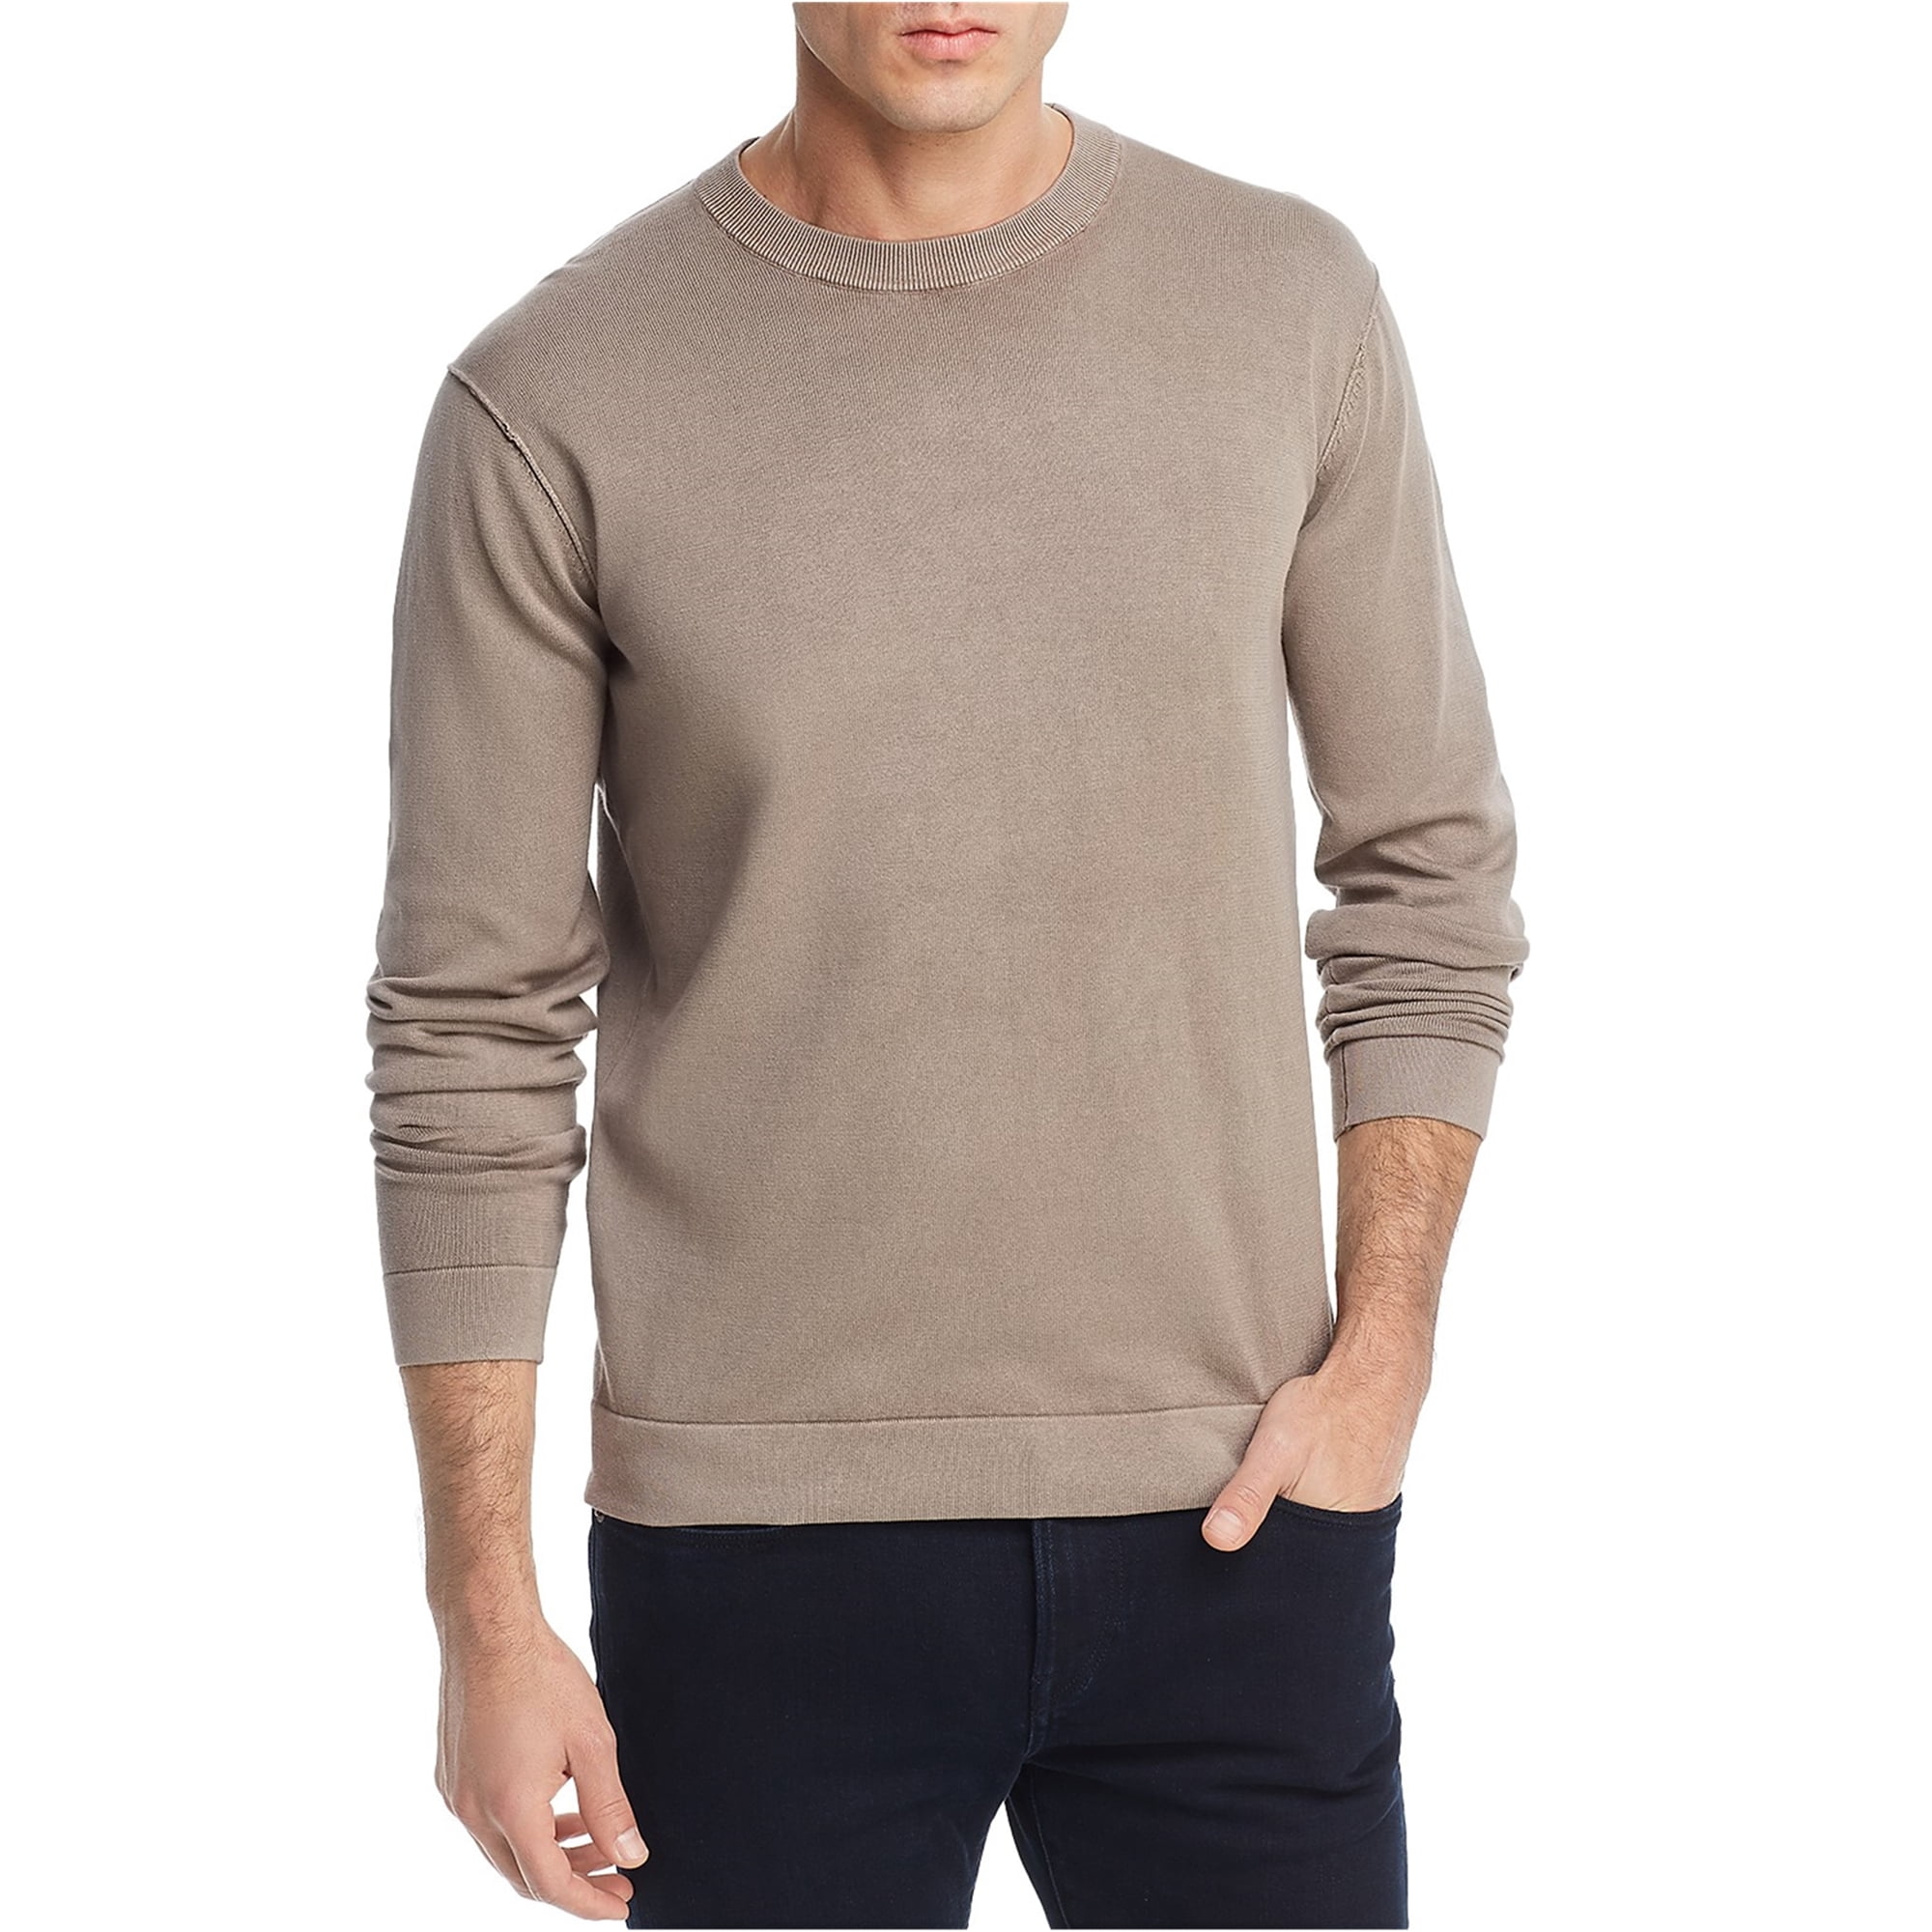 OOBE BRAND - Oobe Brand Mens Crewneck Pullover Sweater - Walmart.com ...